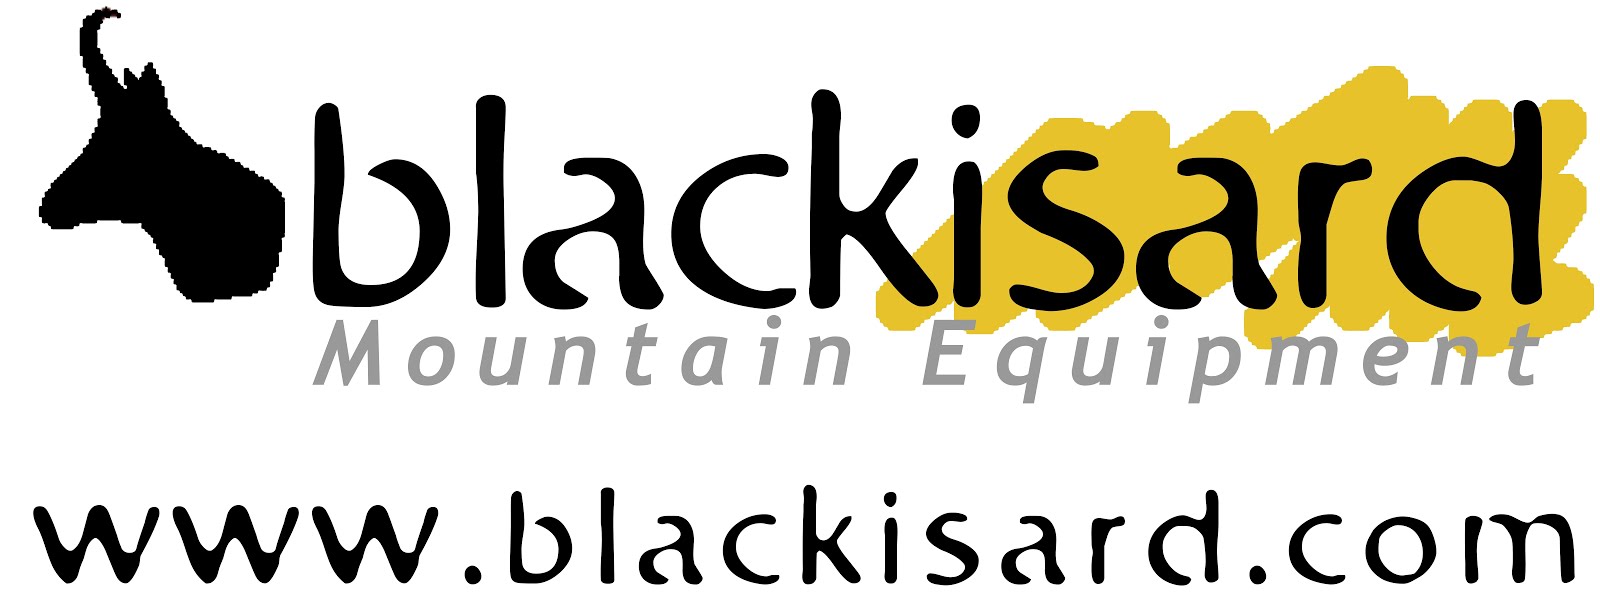 Blackisard Mountain Equipment